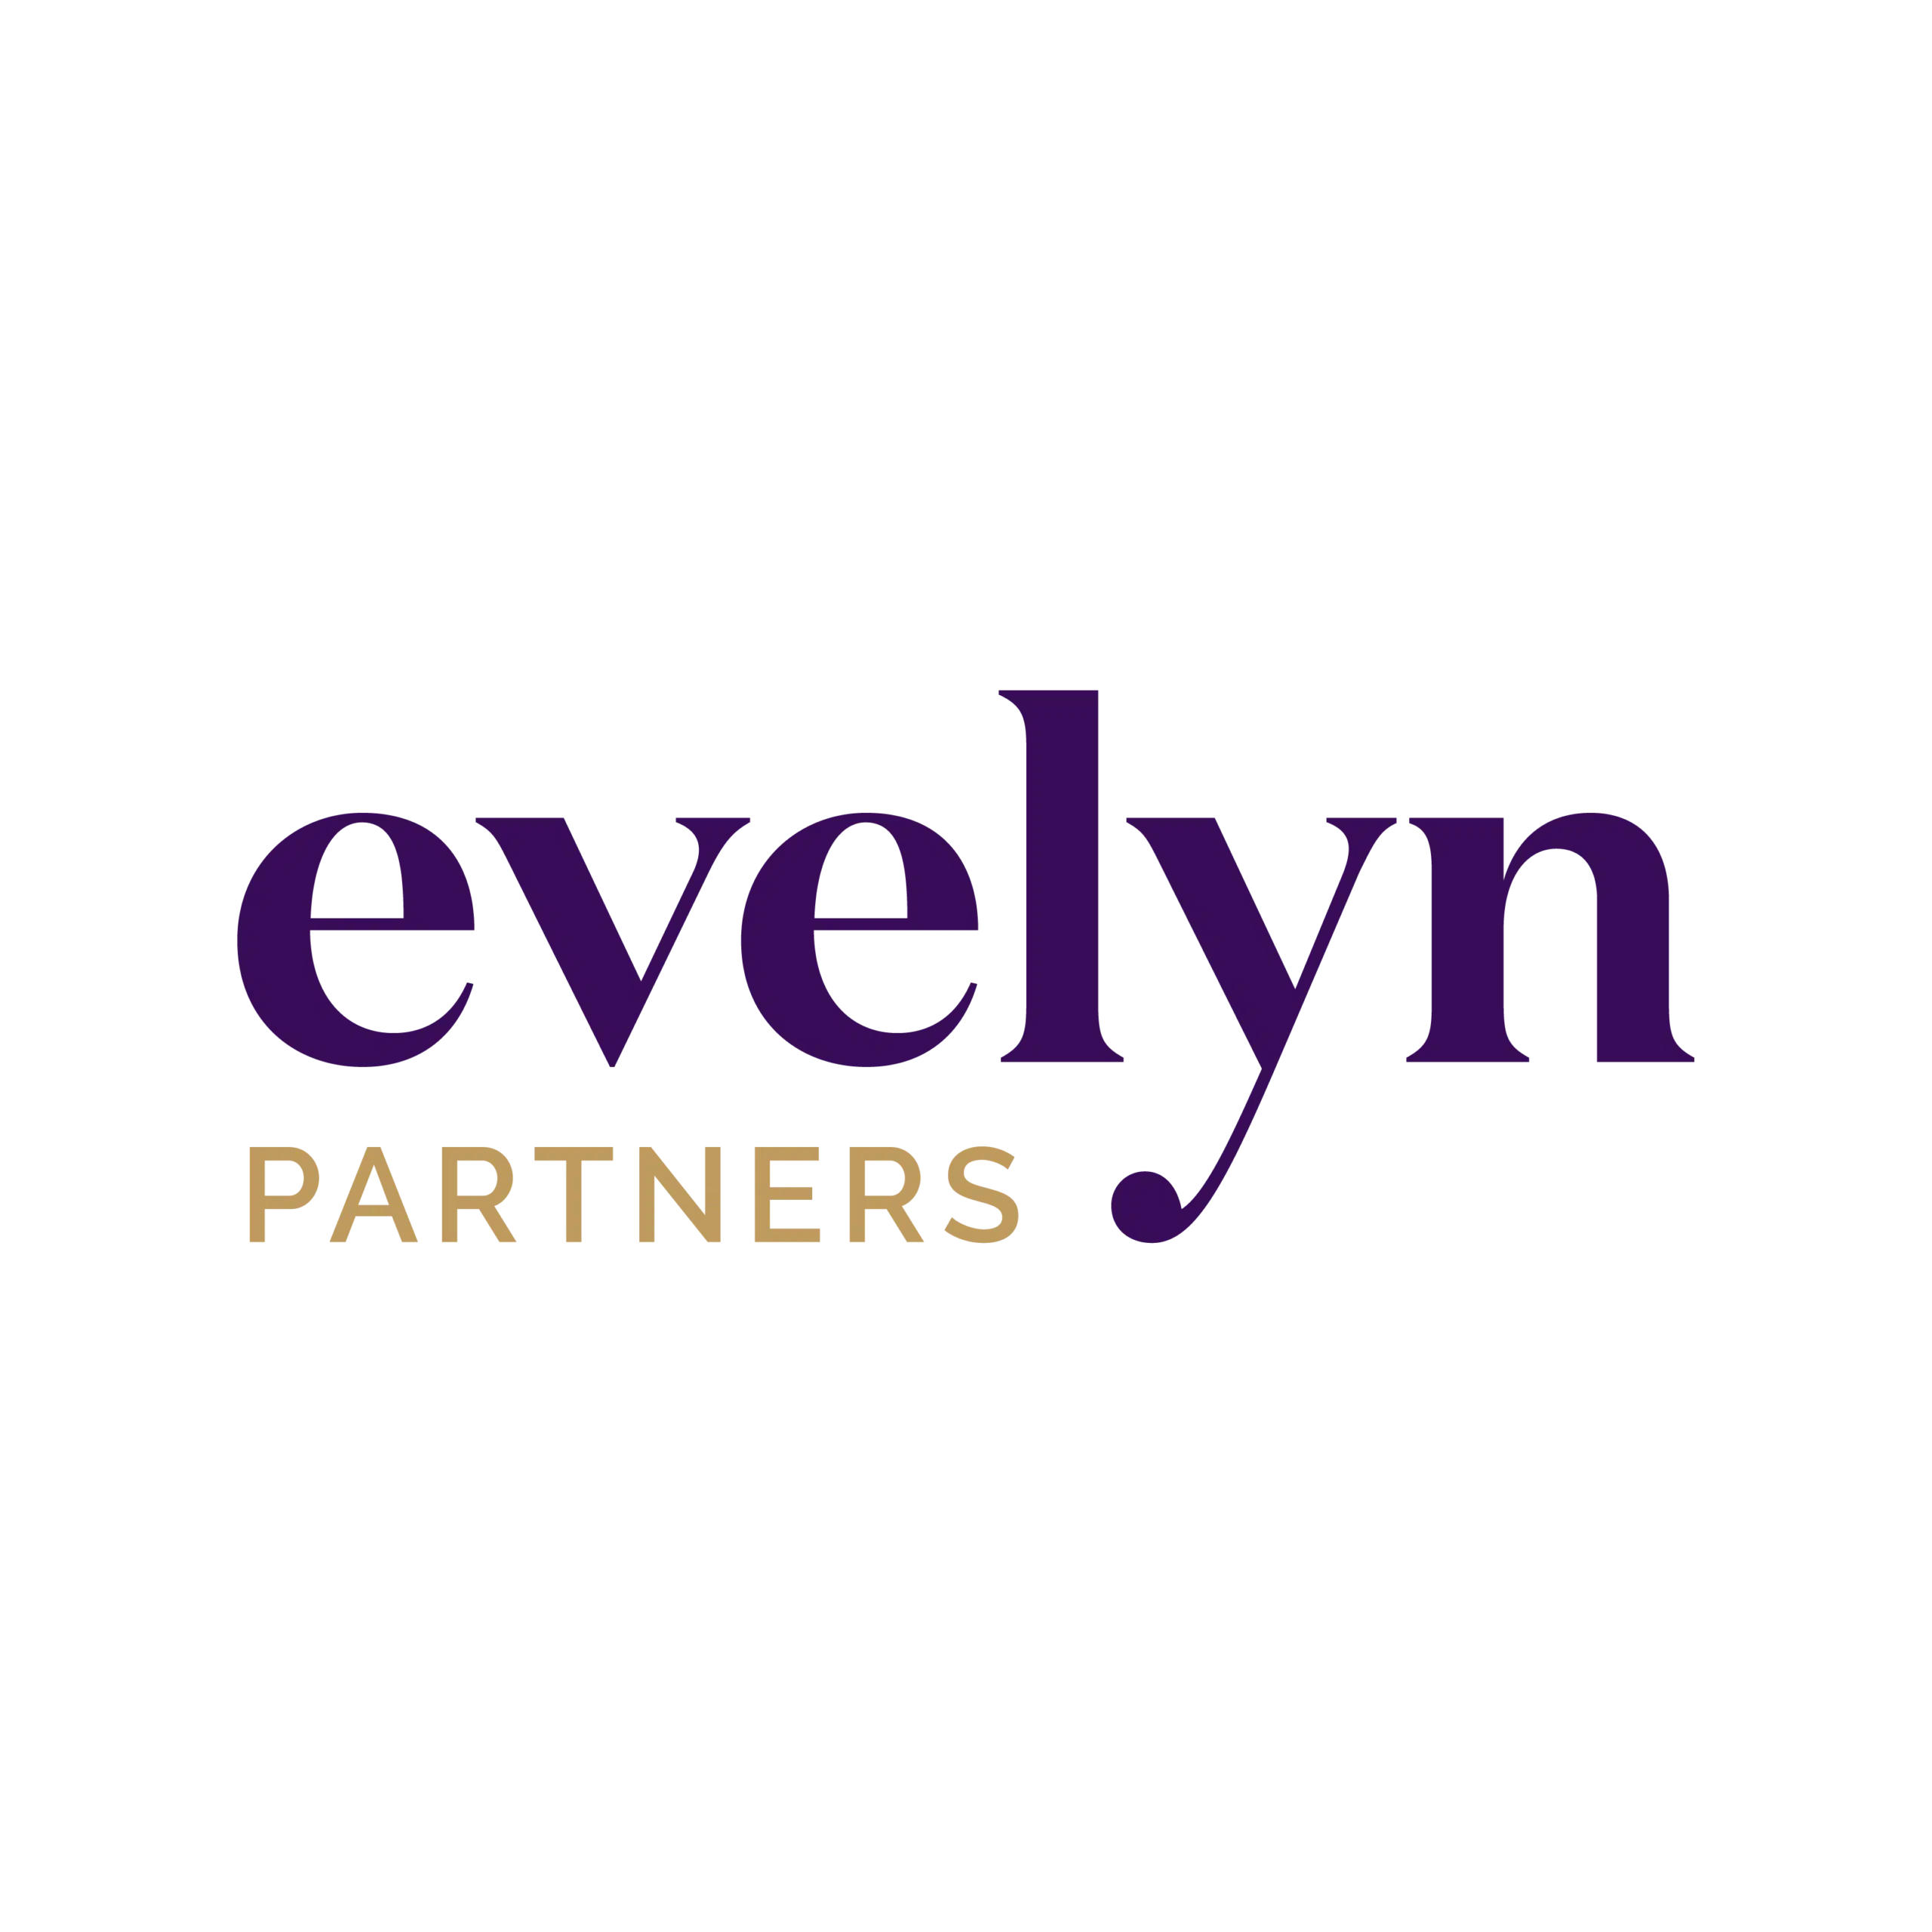 Evelyn Partners logo